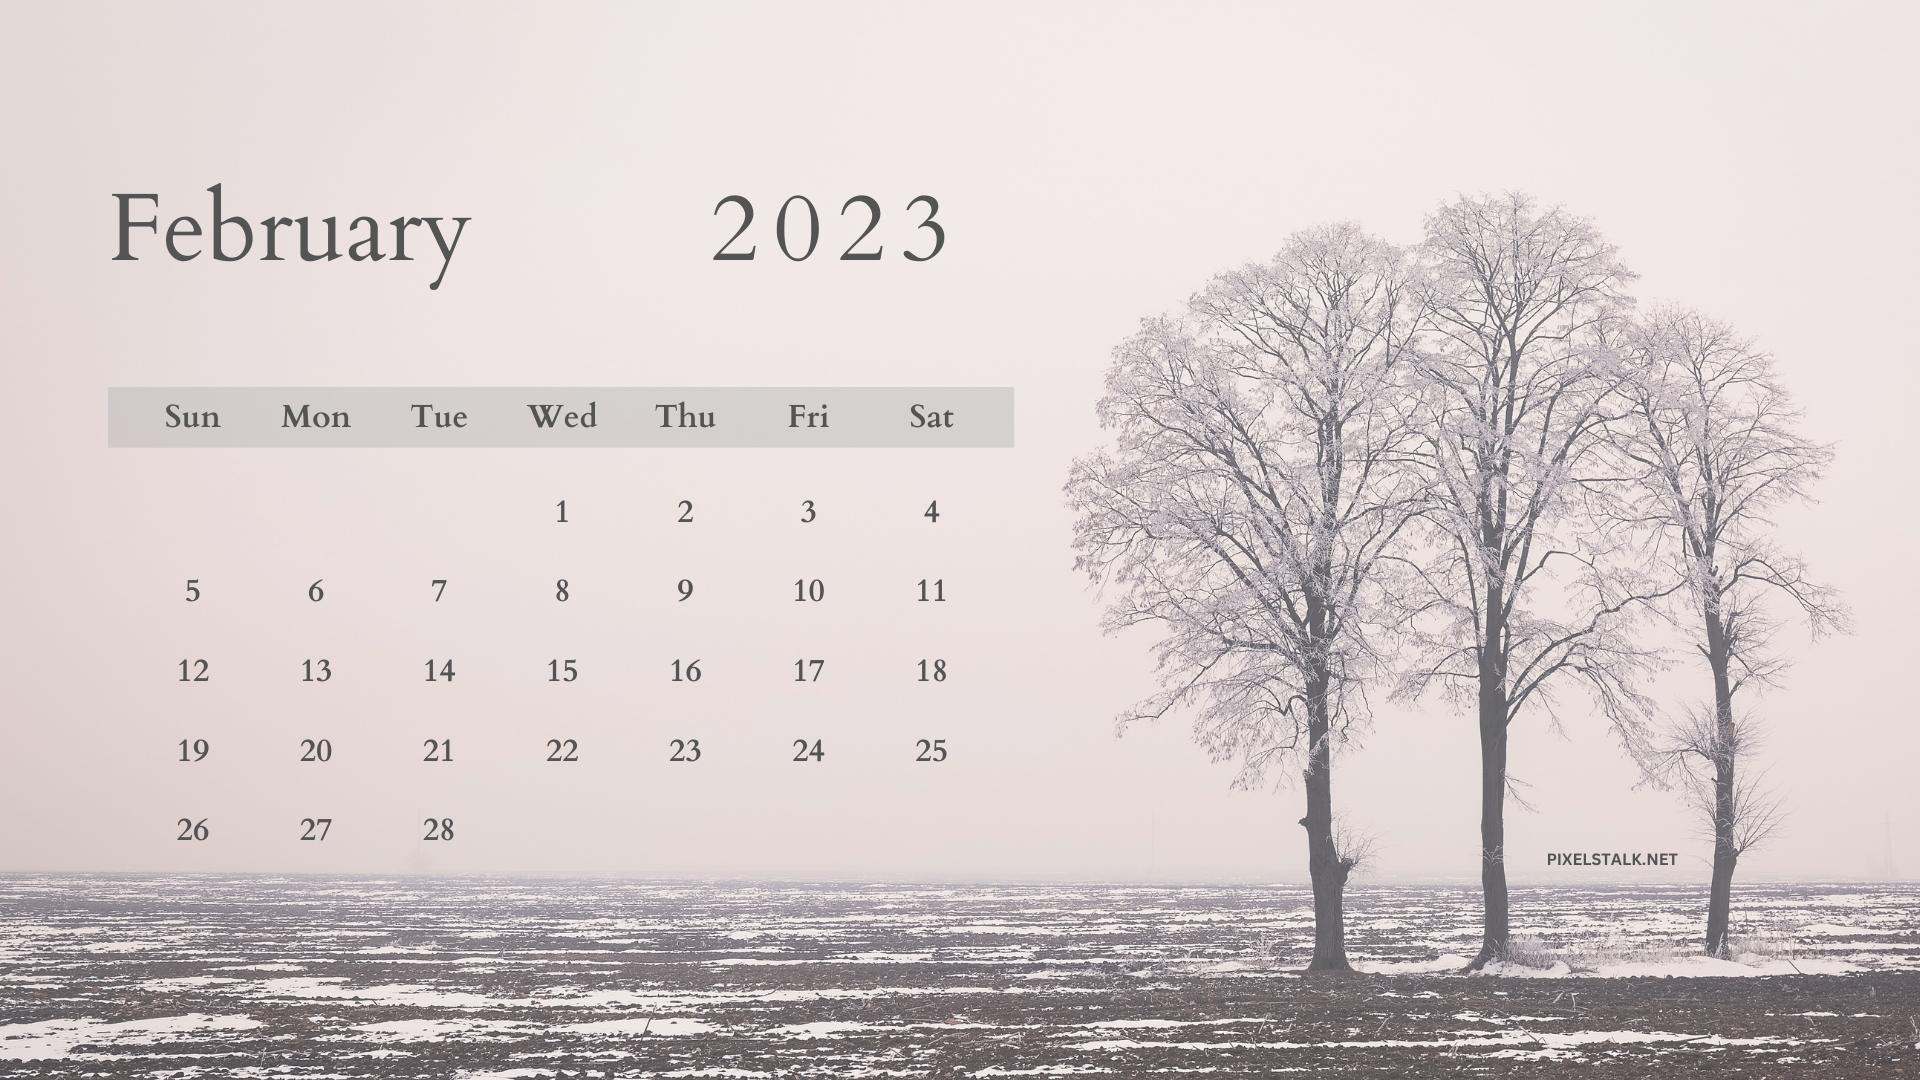 February 2023 Calendar Wallpaper  Wallpapers from TheHolidaySpot